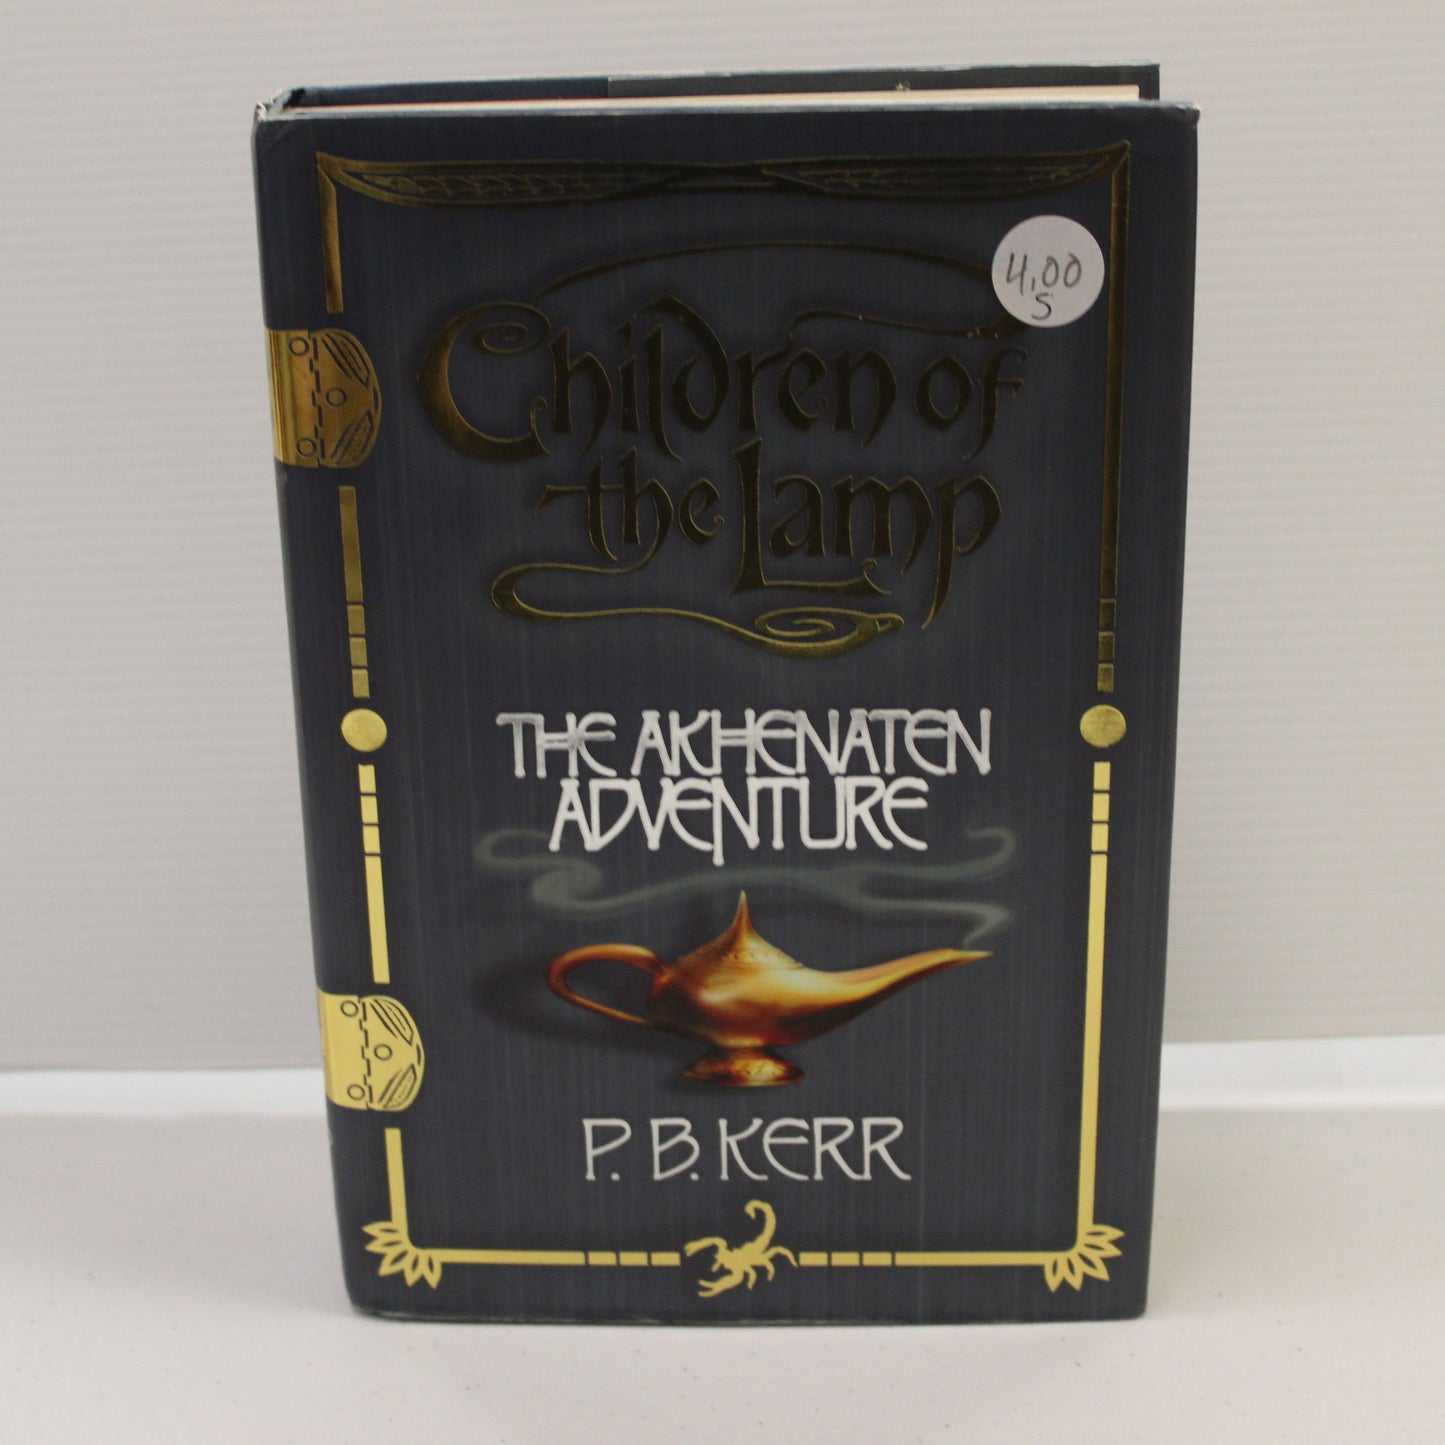 CHILDREN OF THE LAMP - THE AKHENATEN ADVENTURE